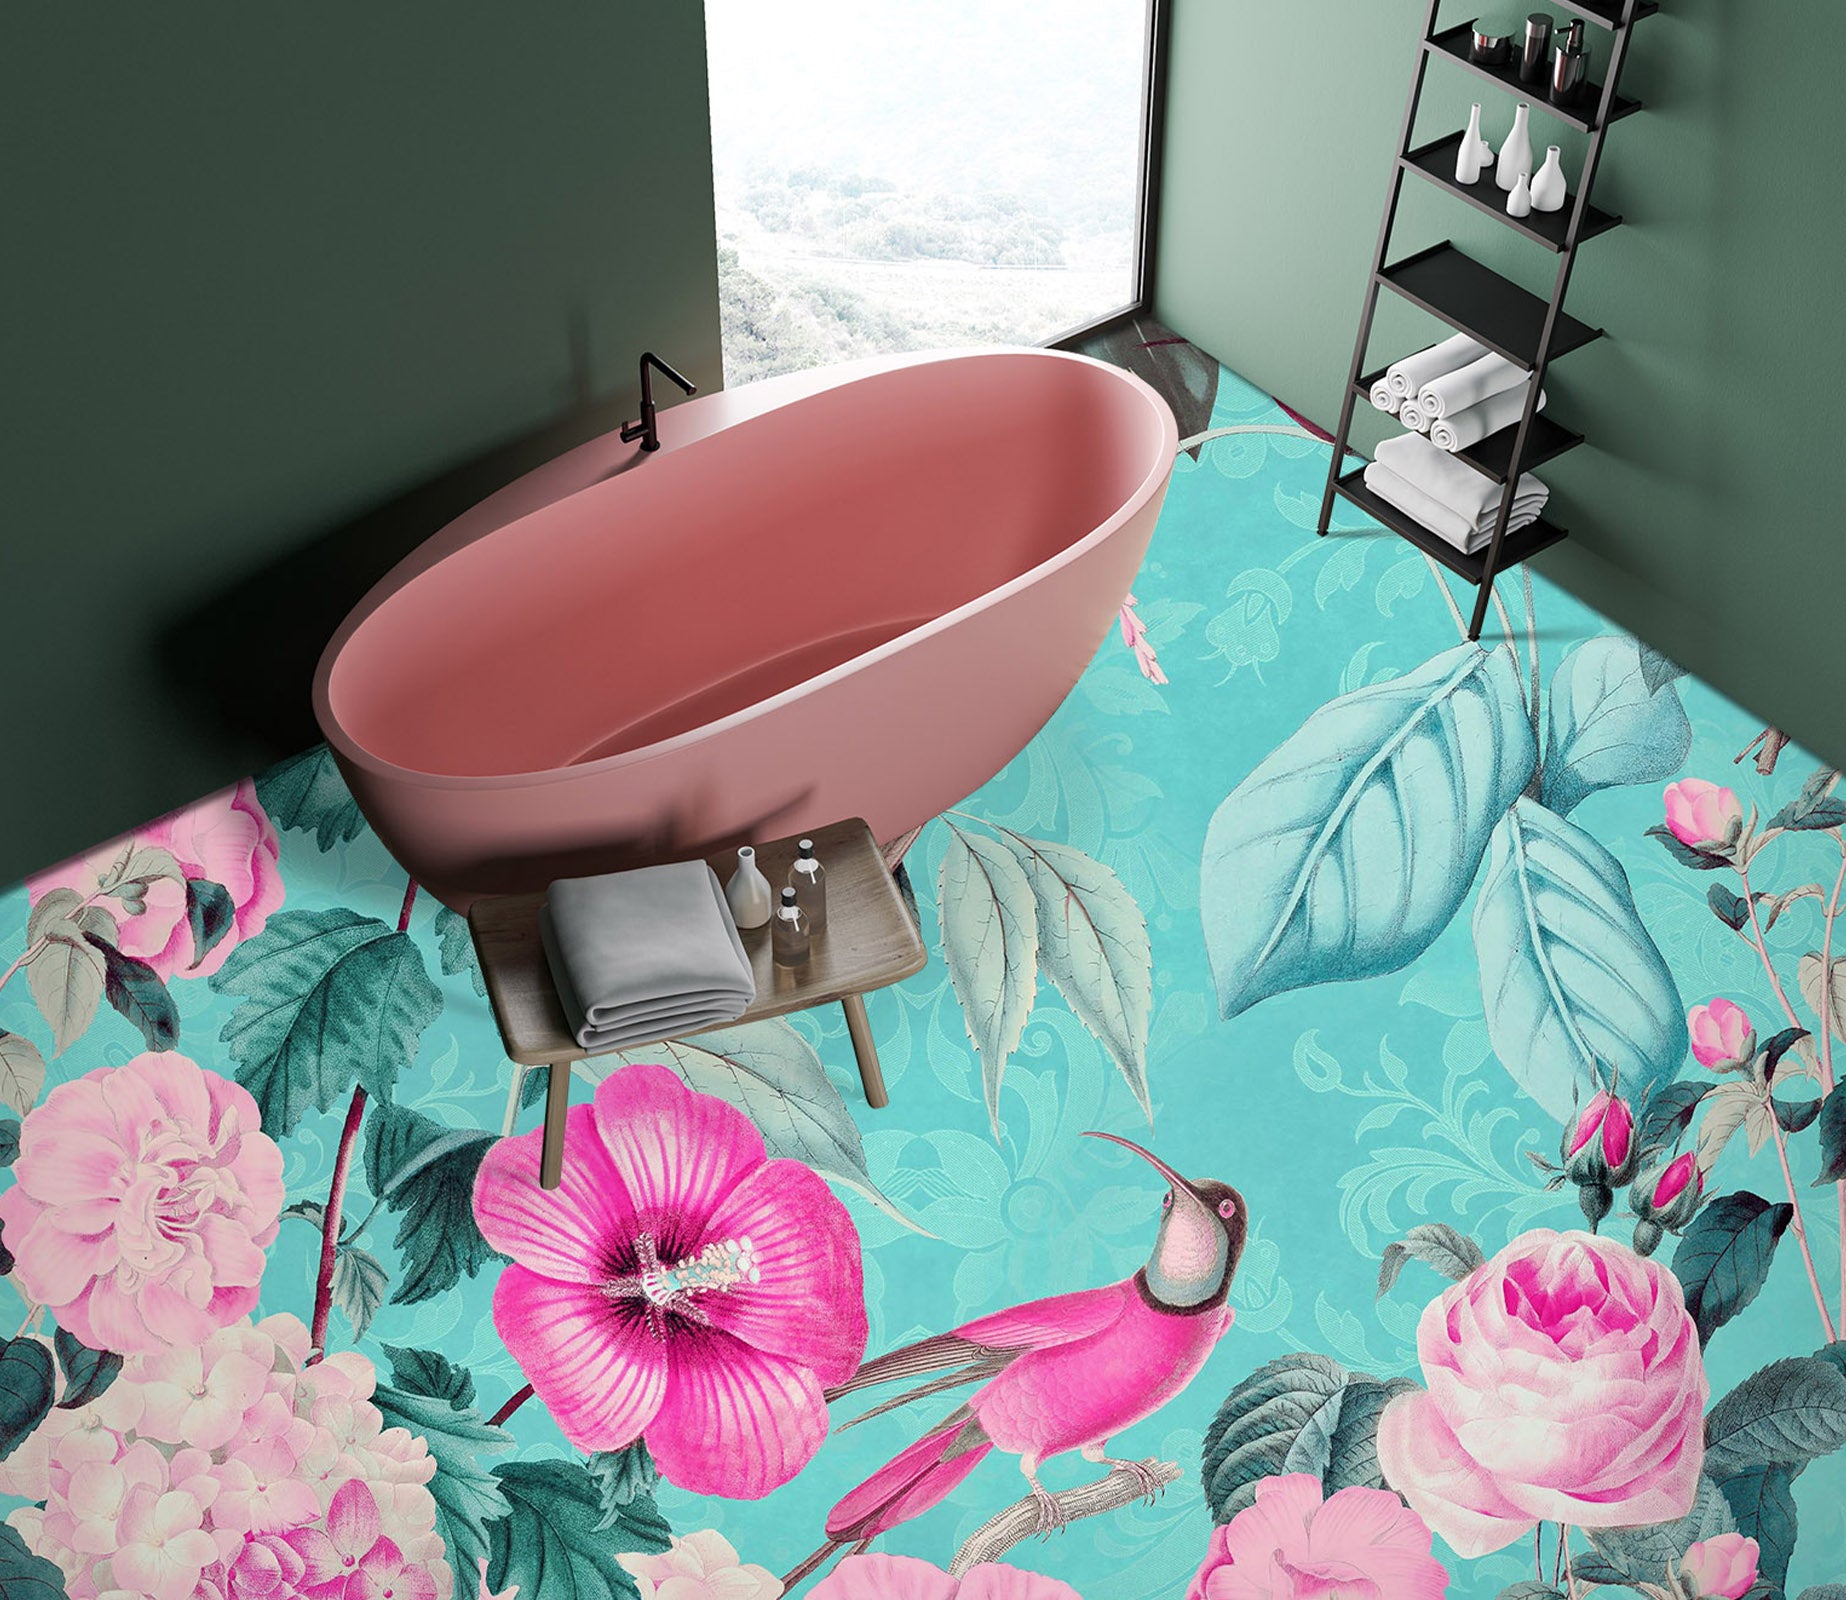 3D Pink Flower Bird Blue 104153 Andrea Haase Floor Mural  Wallpaper Murals Self-Adhesive Removable Print Epoxy